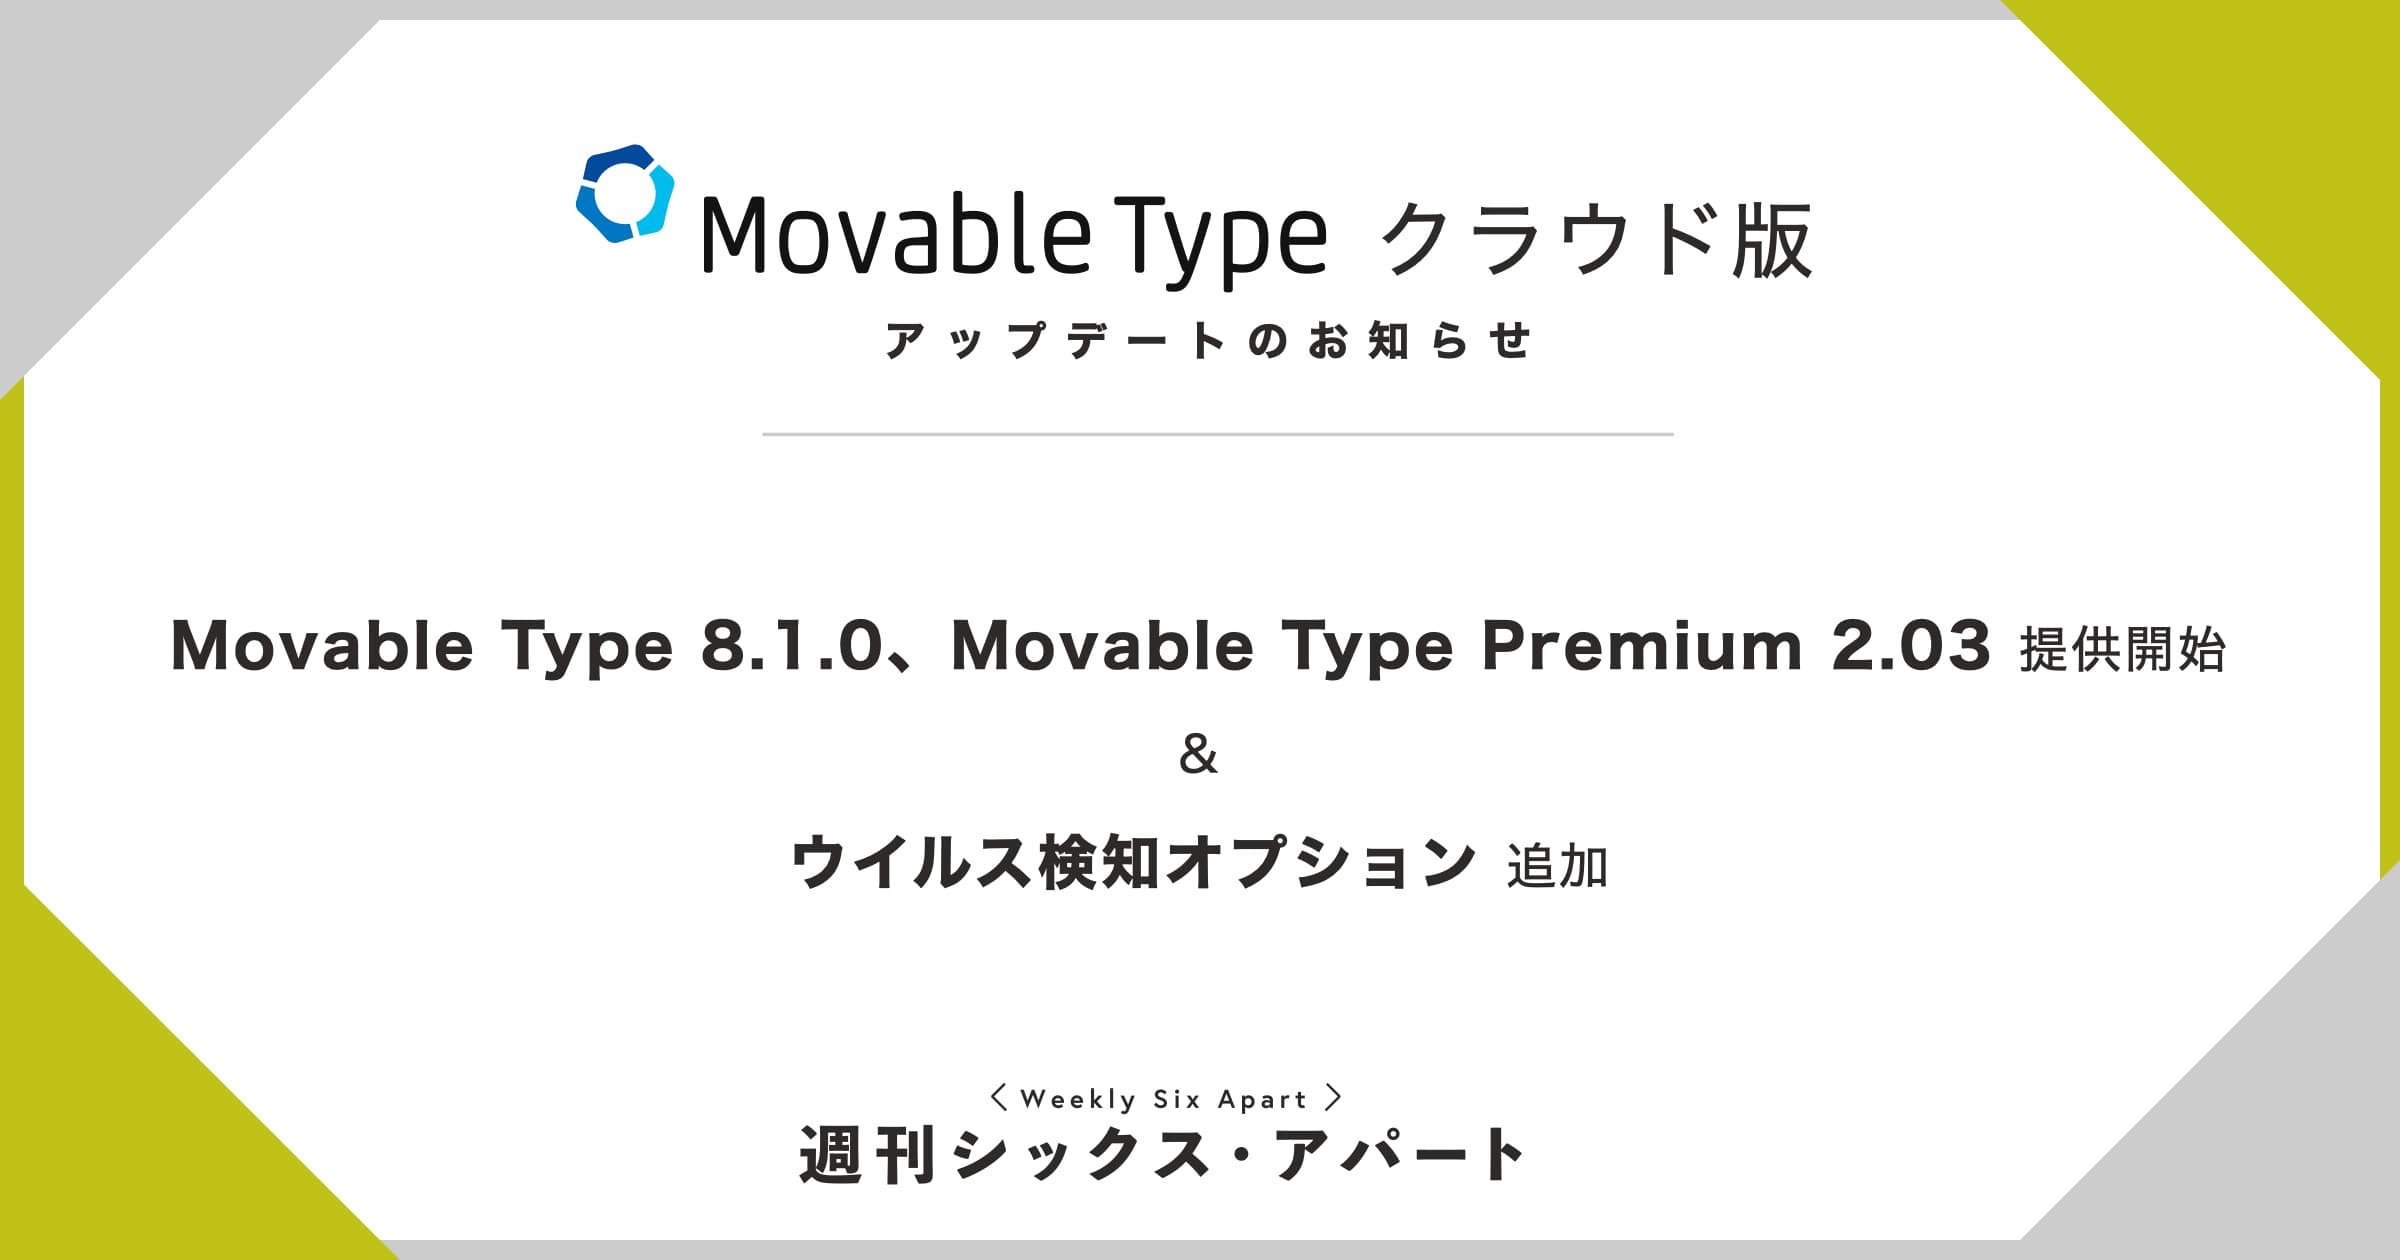 Movable Type 8.1.0、Movable Type Premium 2.03 の提供を開始しました #週刊SA